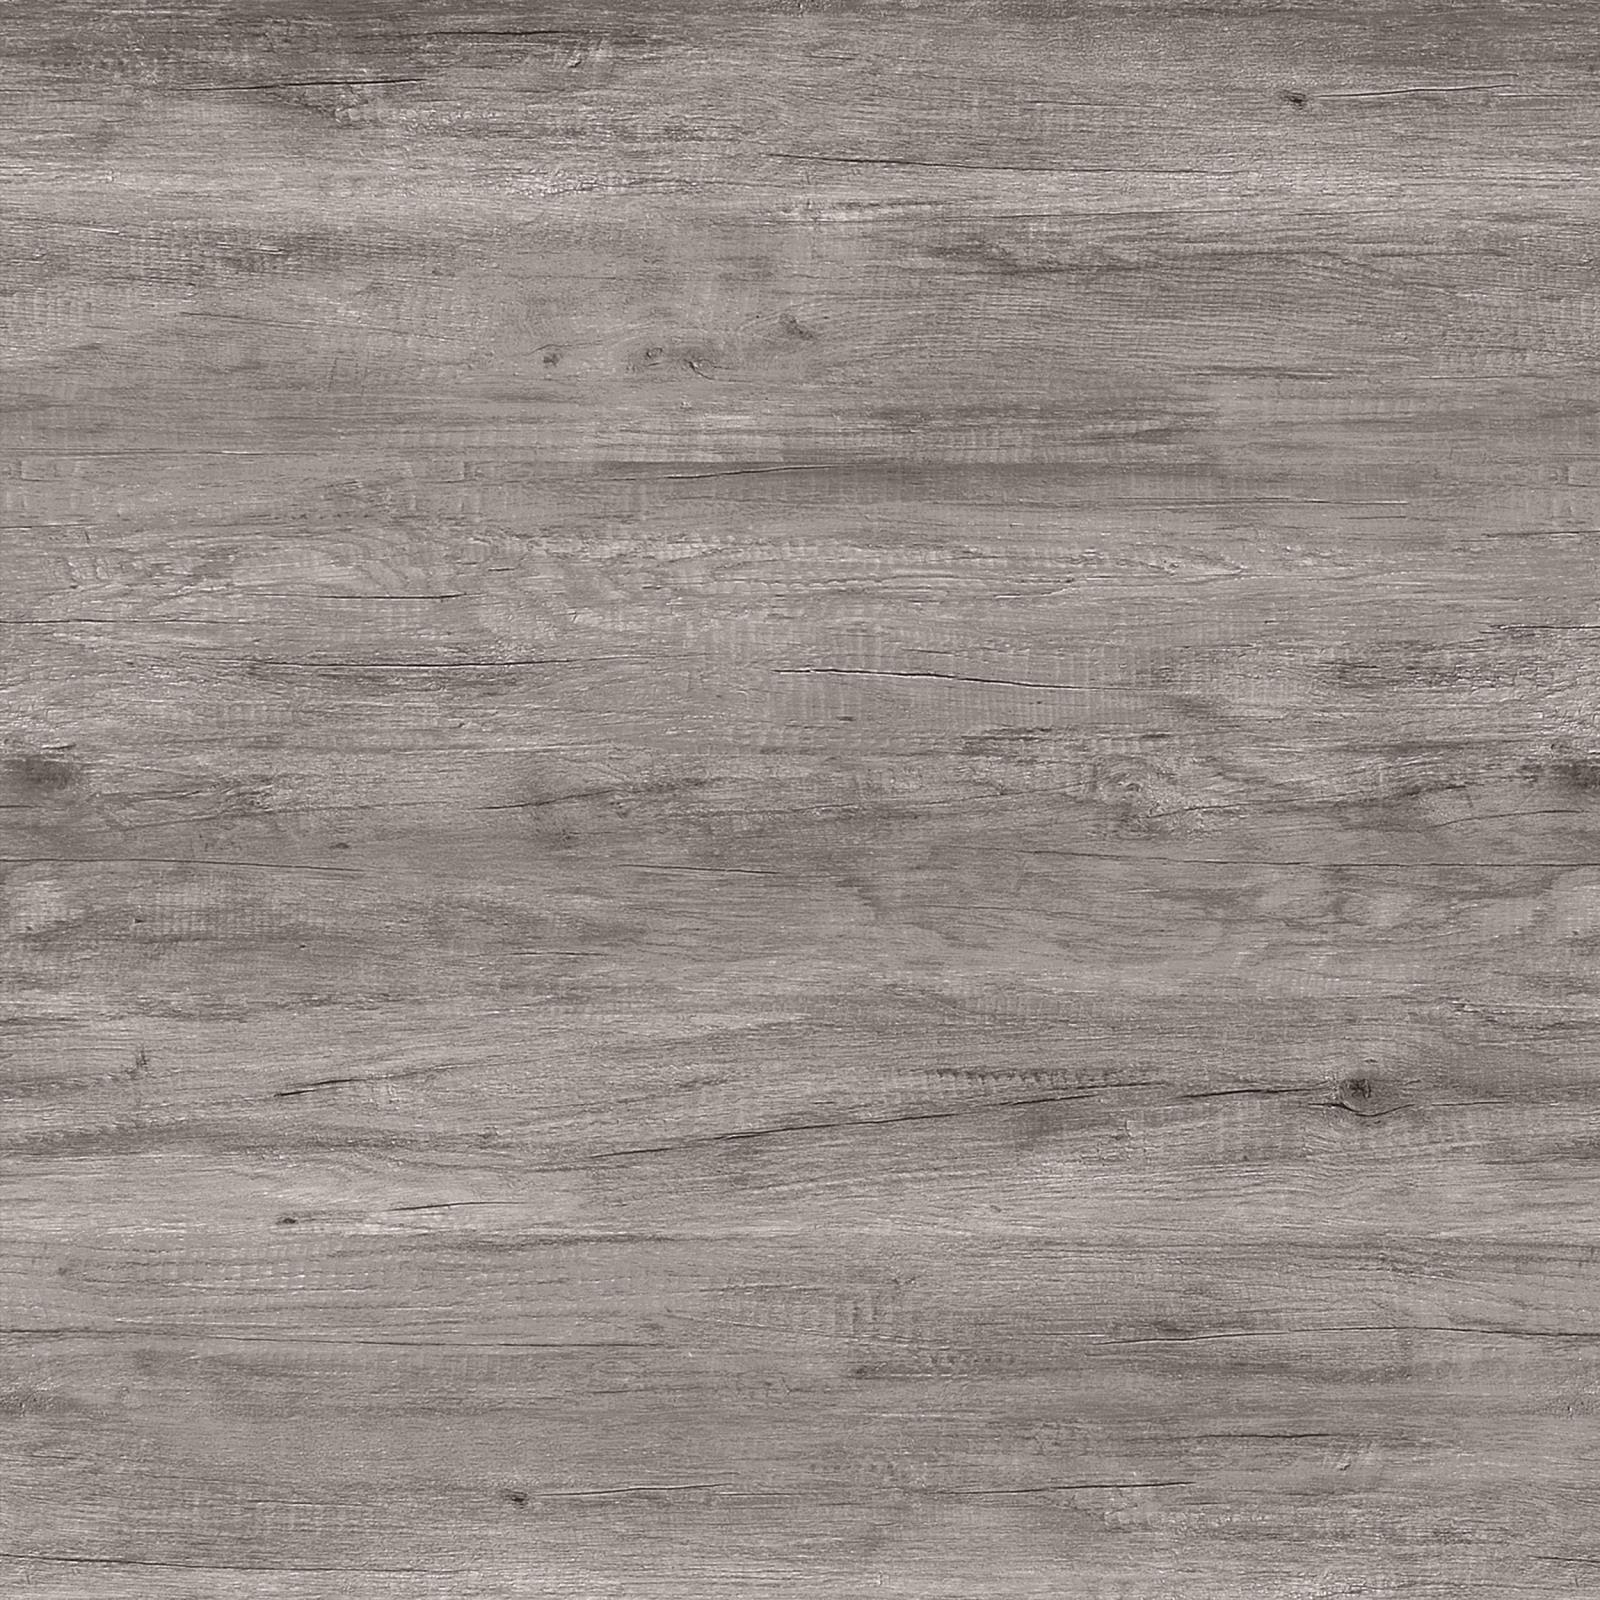 Elmcrest 24-inch Wall Shelf Black/Gray Driftwood - 804416 - Bien Home Furniture &amp; Electronics